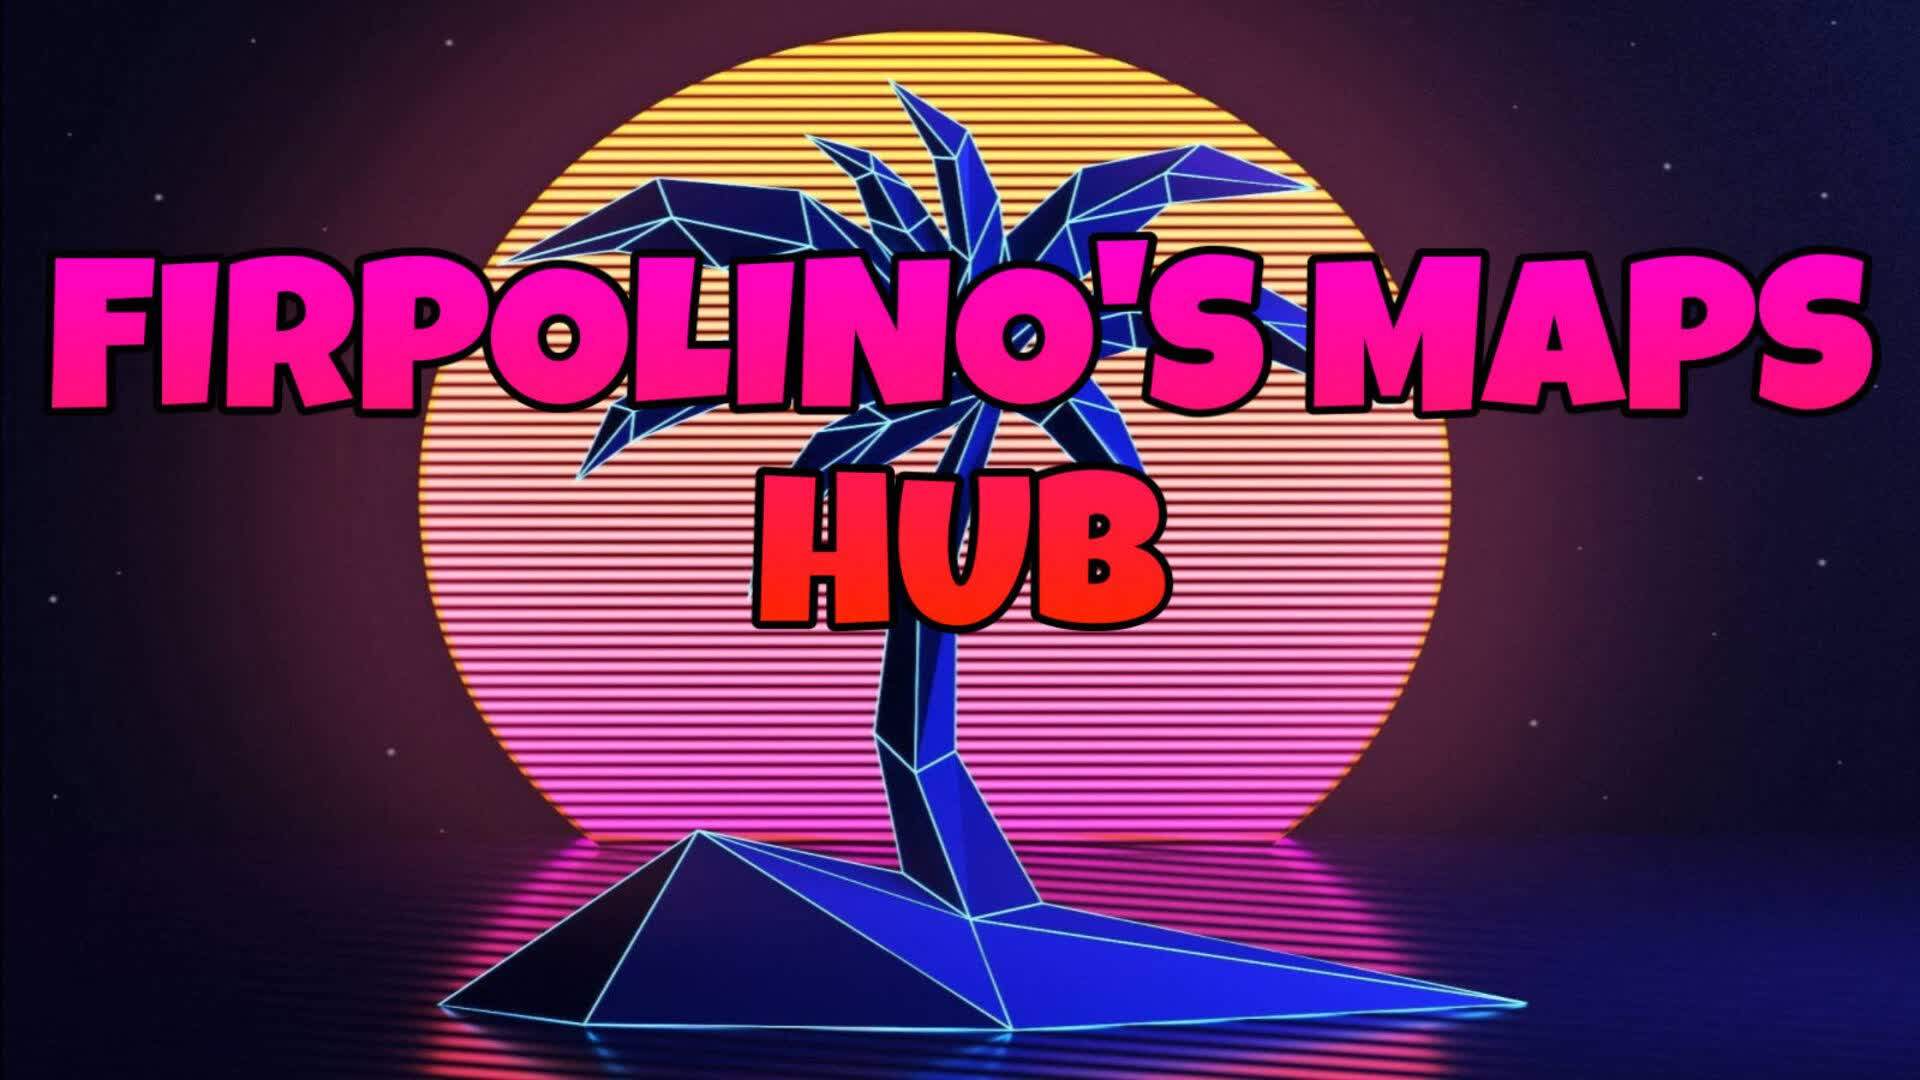 FIRPOLINO’S MAPS HUB